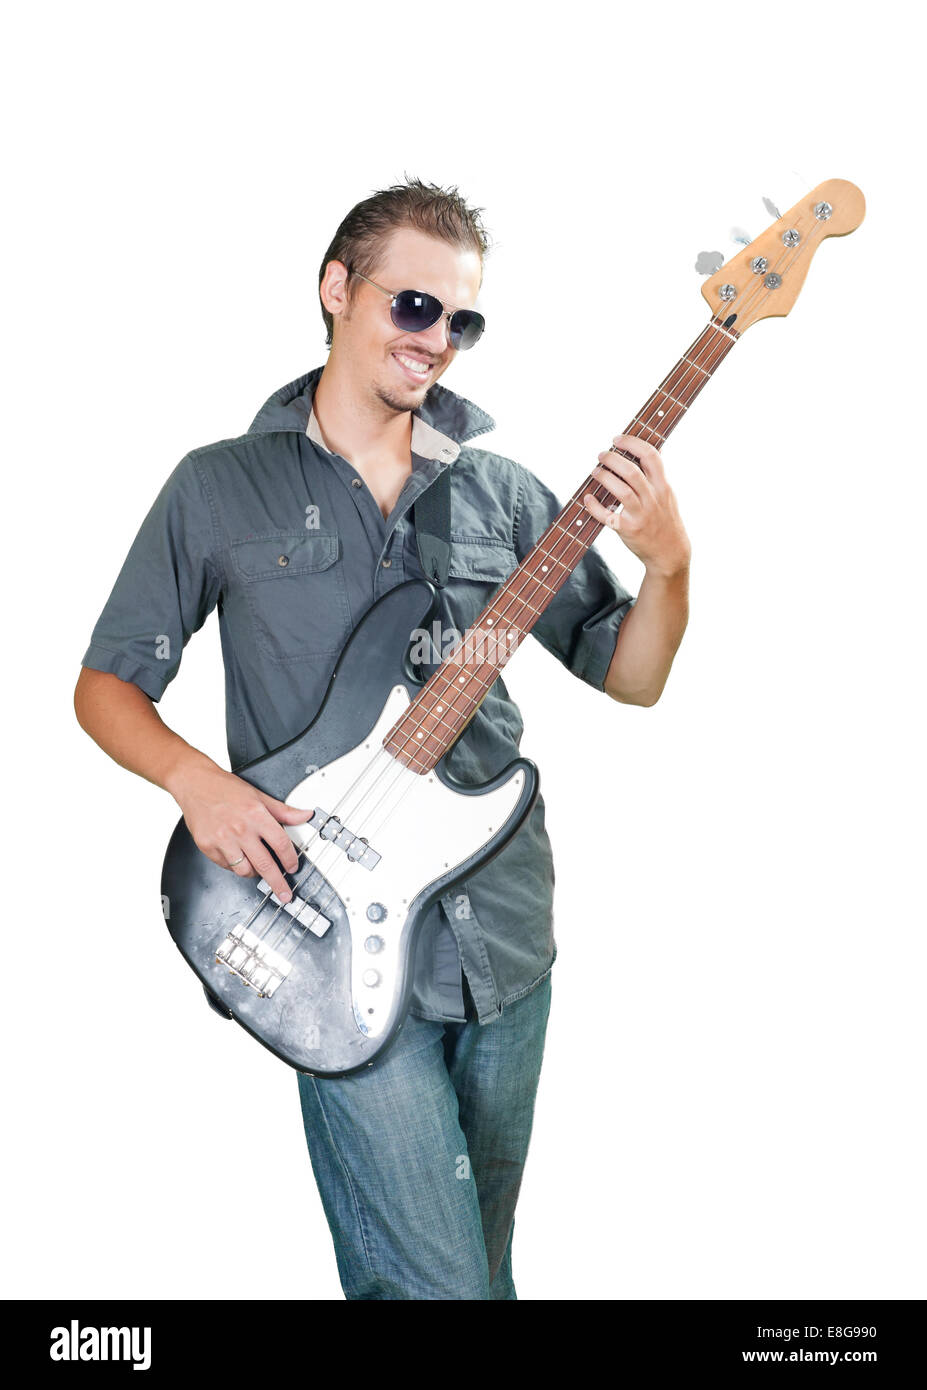 Cool european bass guitar player wearing sun glasses Stock Photo